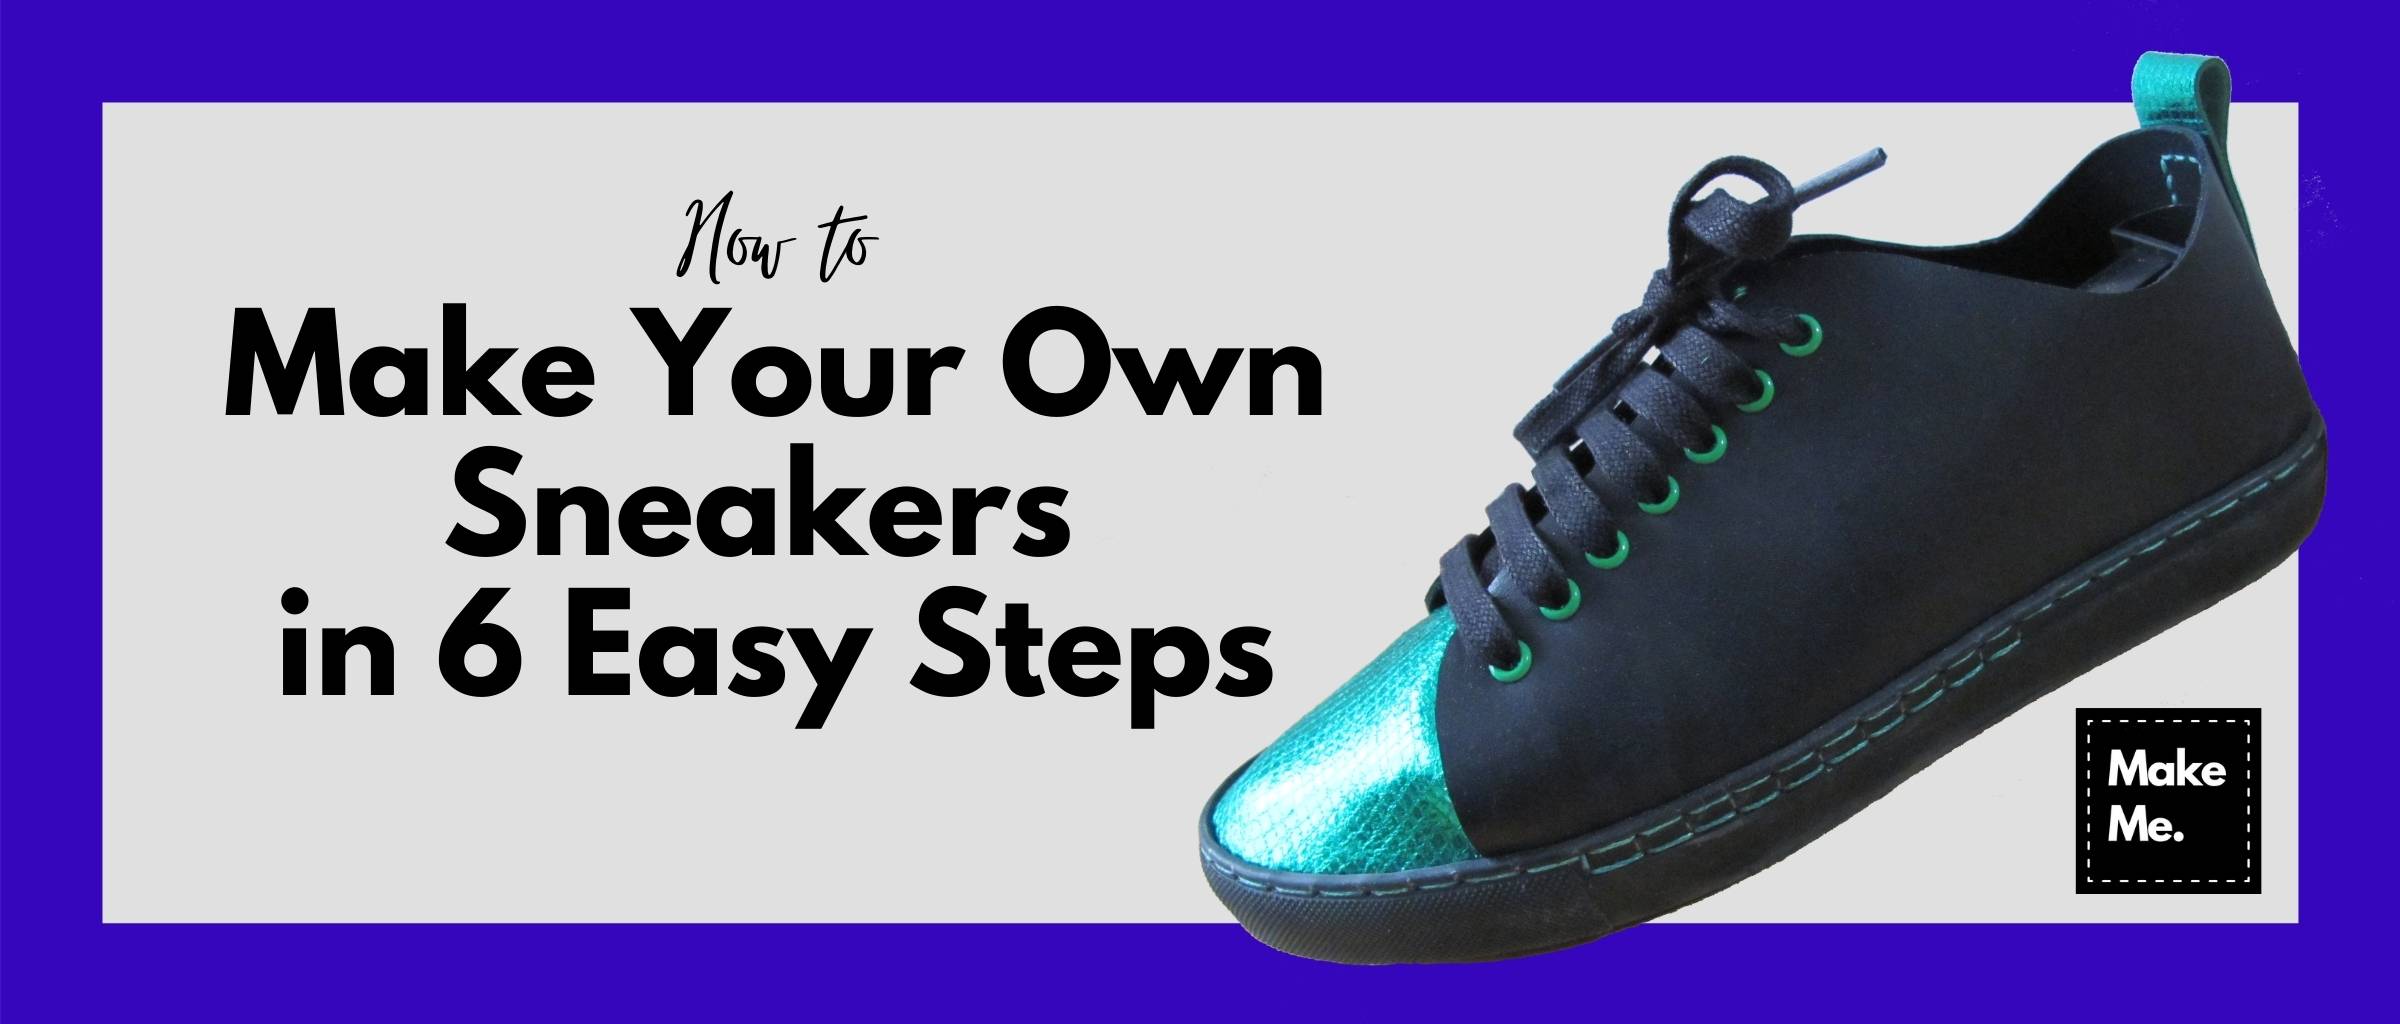 How to Make Own Sneakers 6 Easy Steps – Make Me | Shoe-Making Kits Workshops